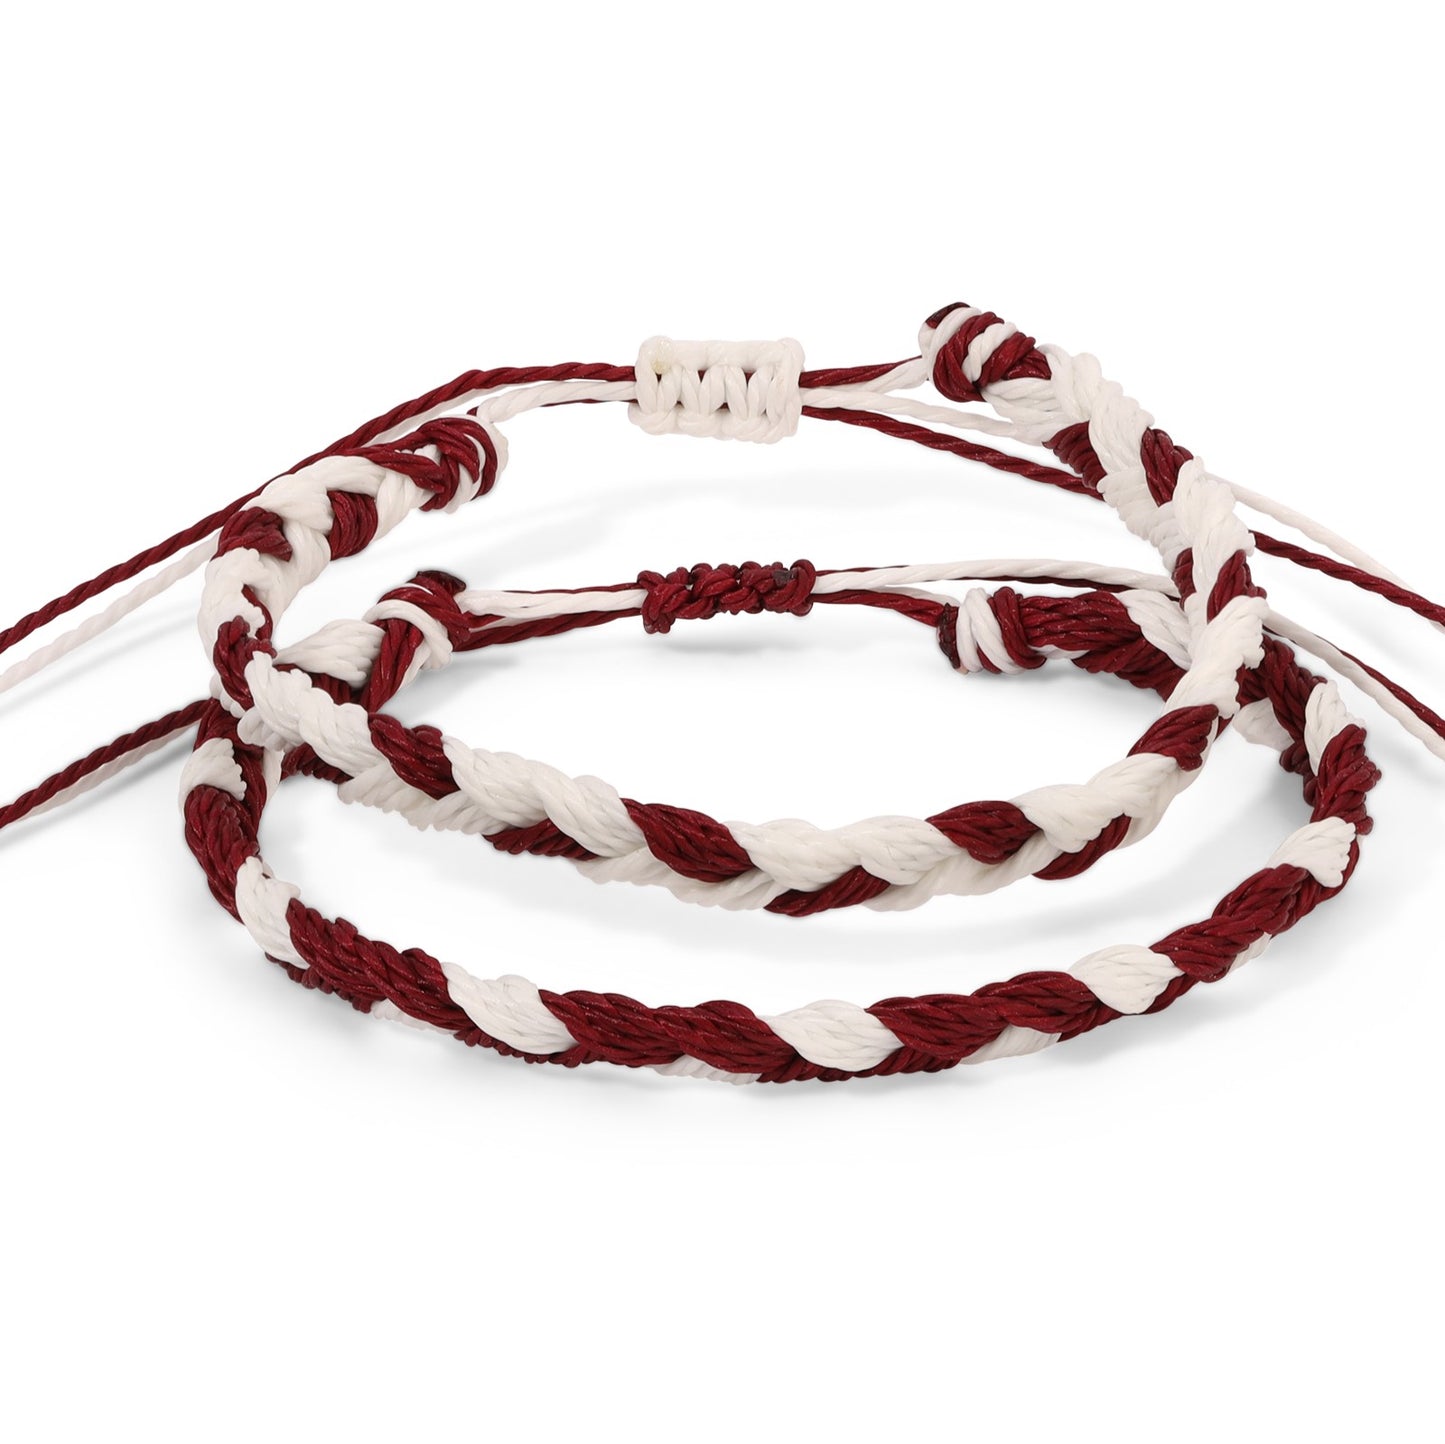 Maroon & White Team Color Braided Bracelets - Set of 2